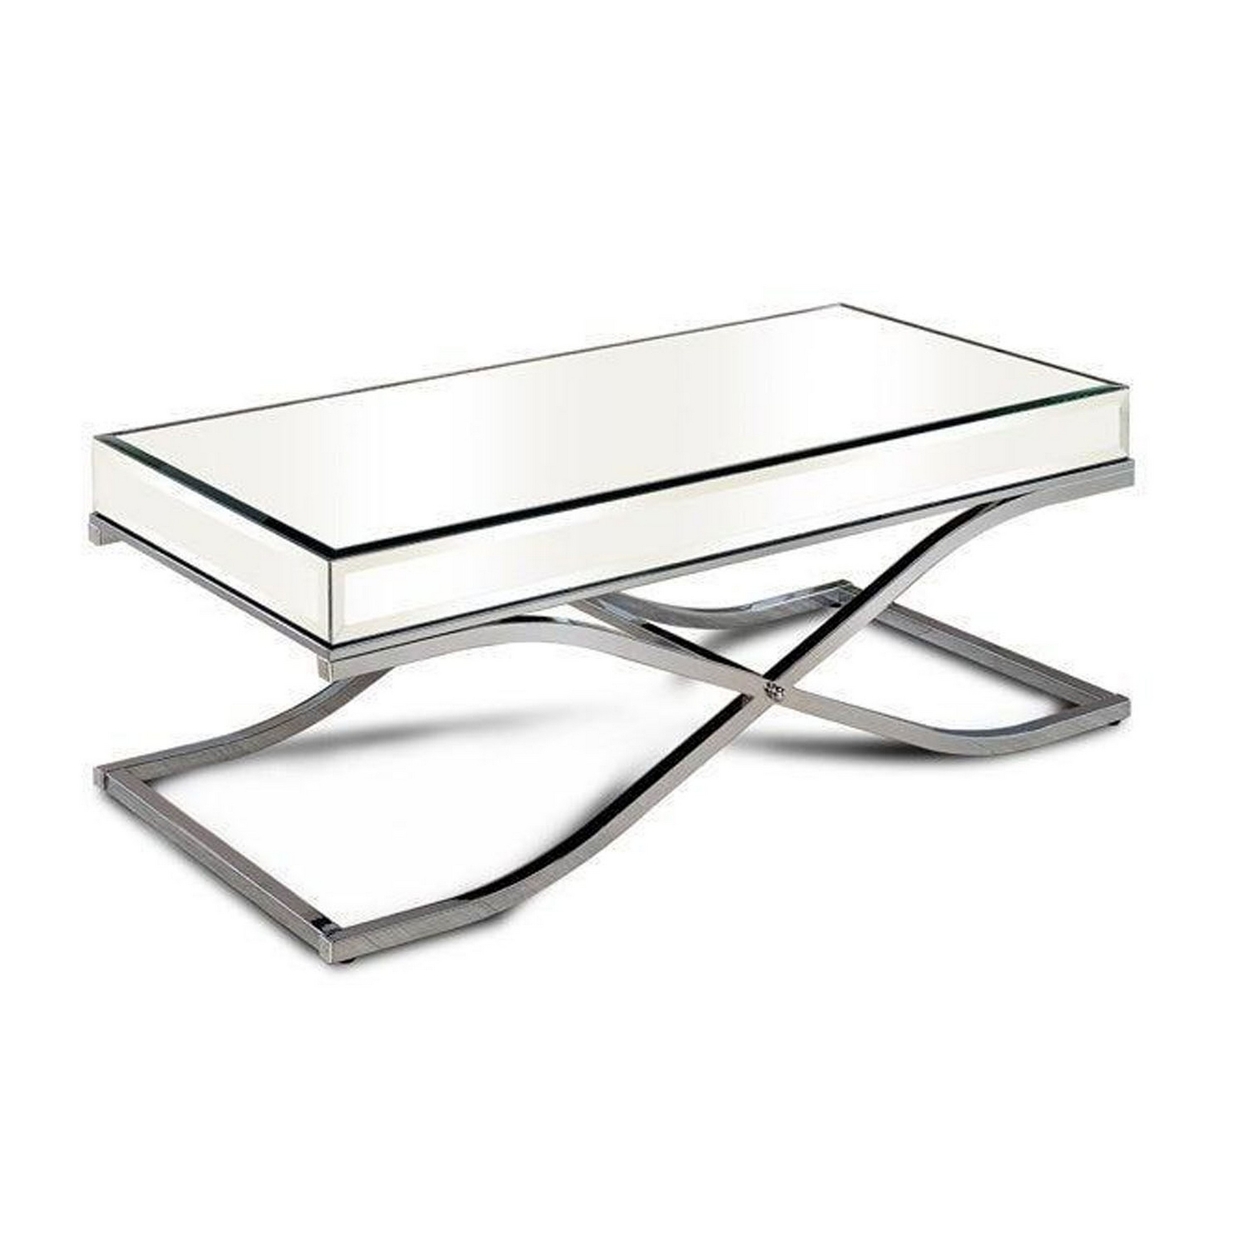 Gavin 48 Inch Coffee Table, Mirrored Panels, Curved Crossed Frame, Chrome- Saltoro Sherpi